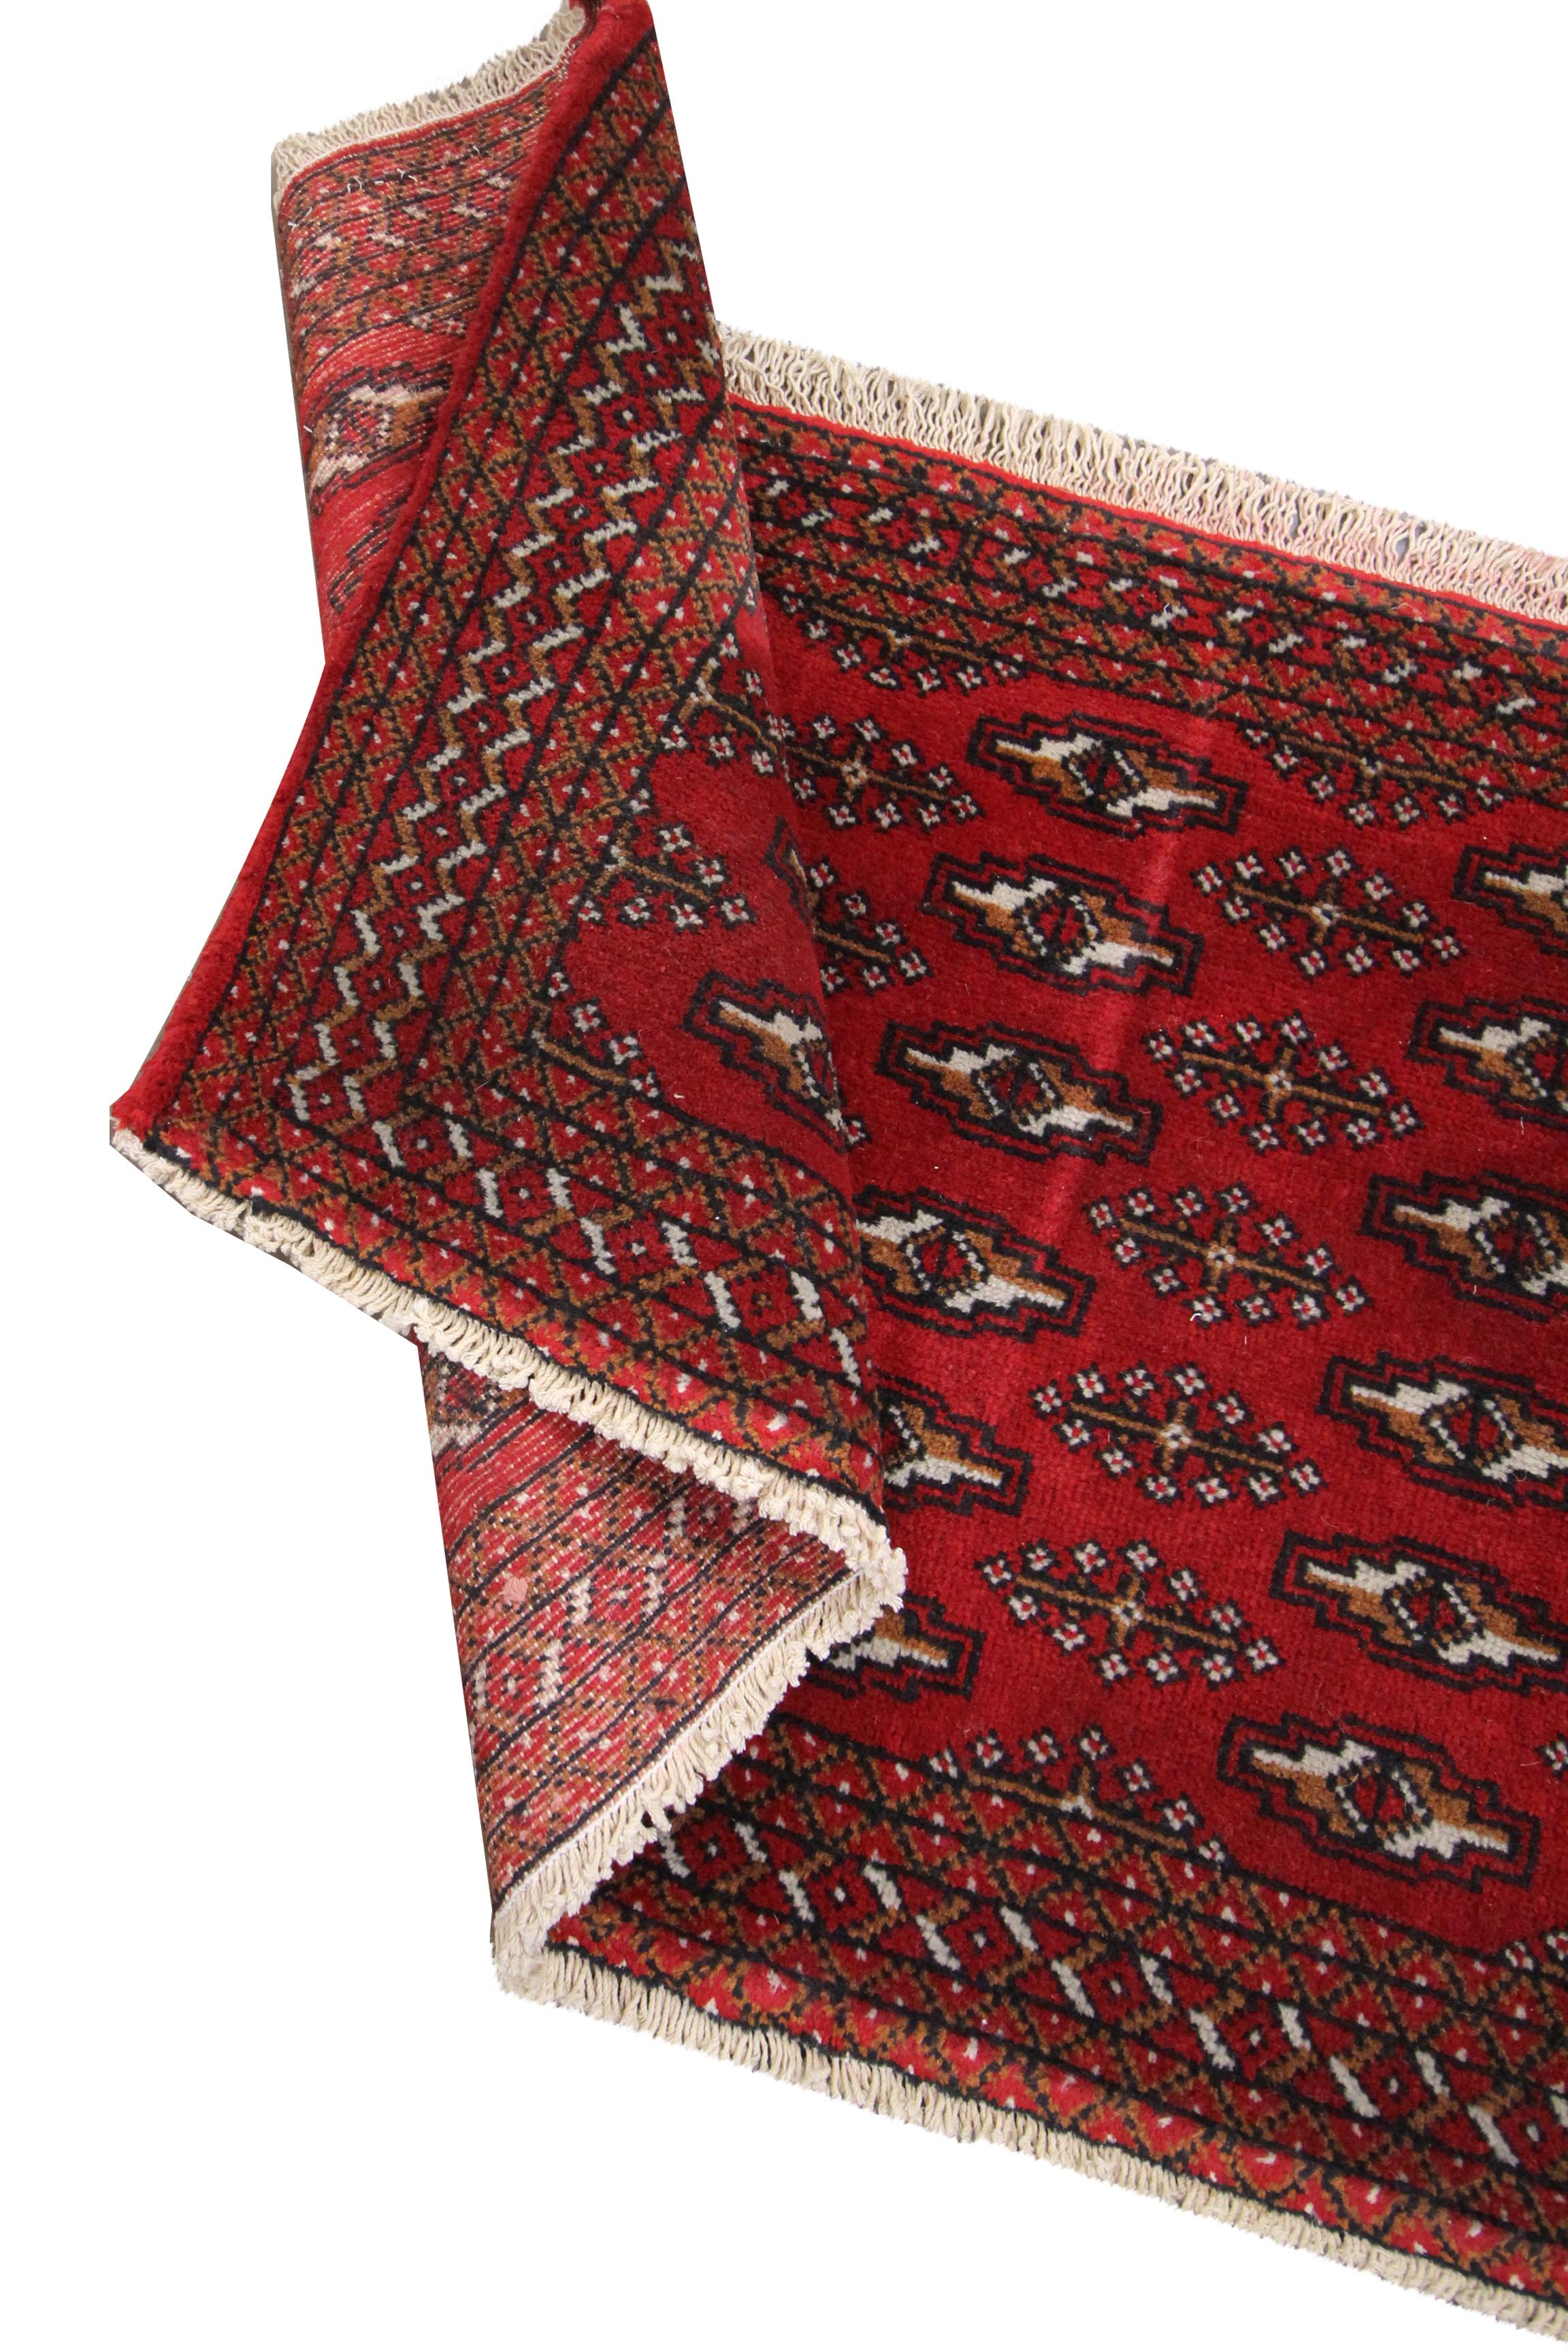 Wool Area Rug Traditional Red Afghan Poshti Small Rug Handmade Oriental For Sale 1